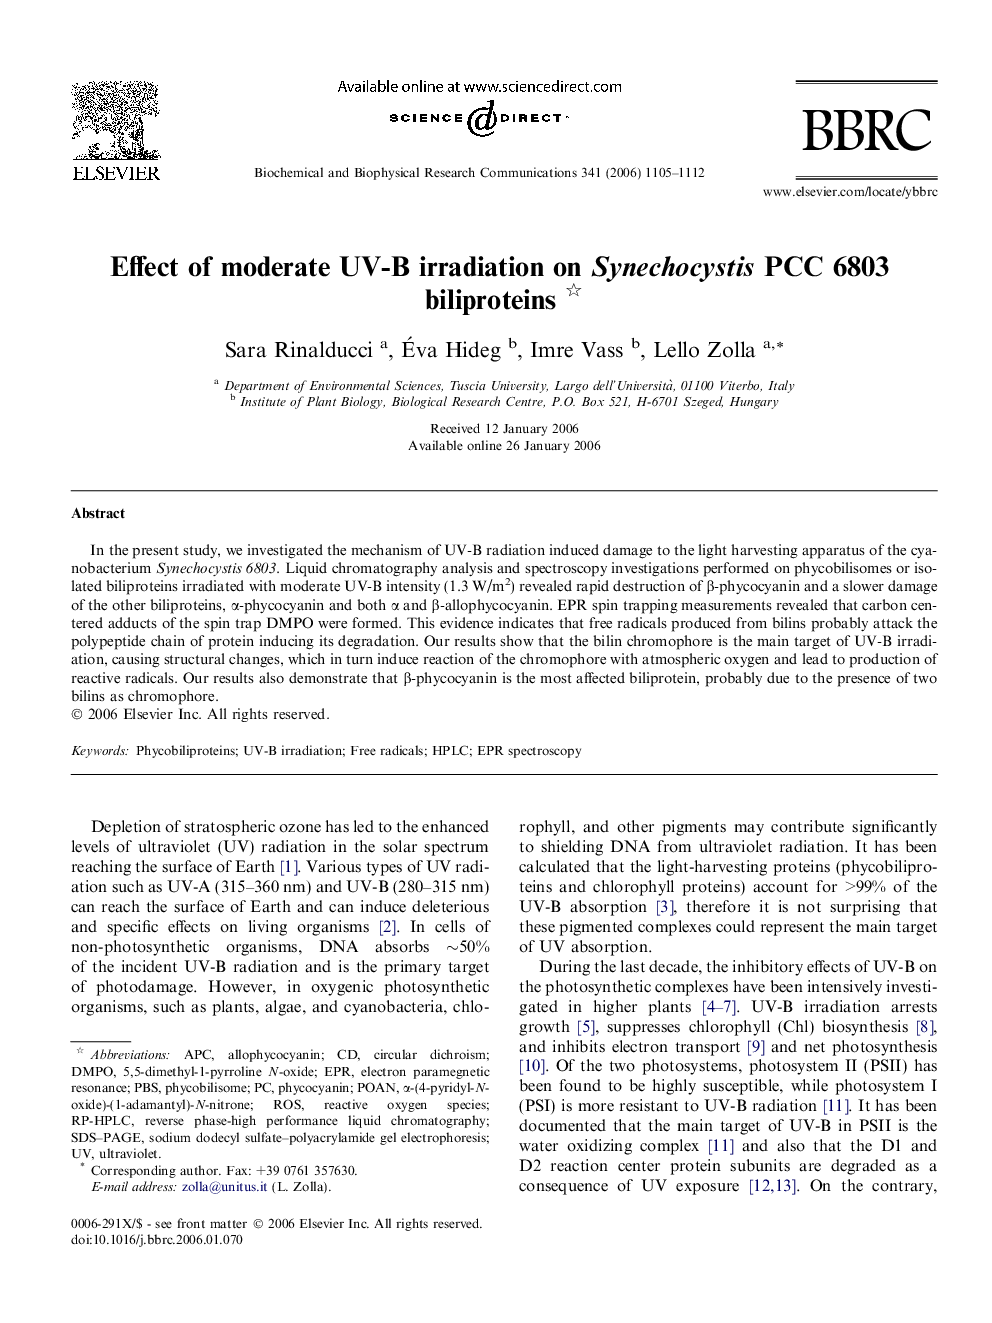 Effect of moderate UV-B irradiation on Synechocystis PCC 6803 biliproteins 